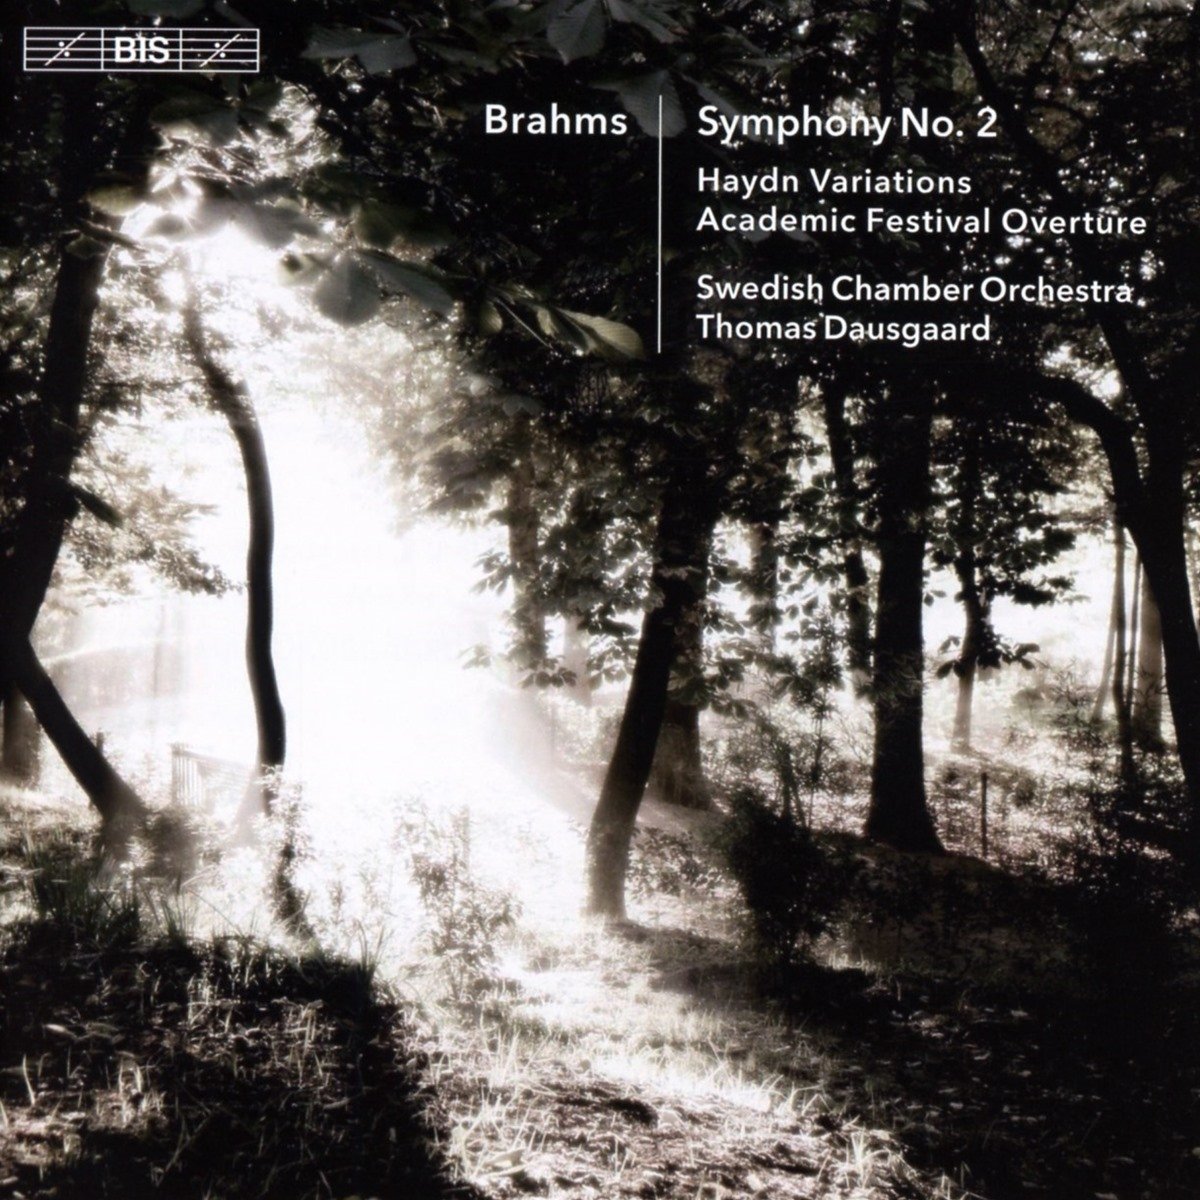 Brahms: Symphony No. 2 - Thomas Dausgaard conducts